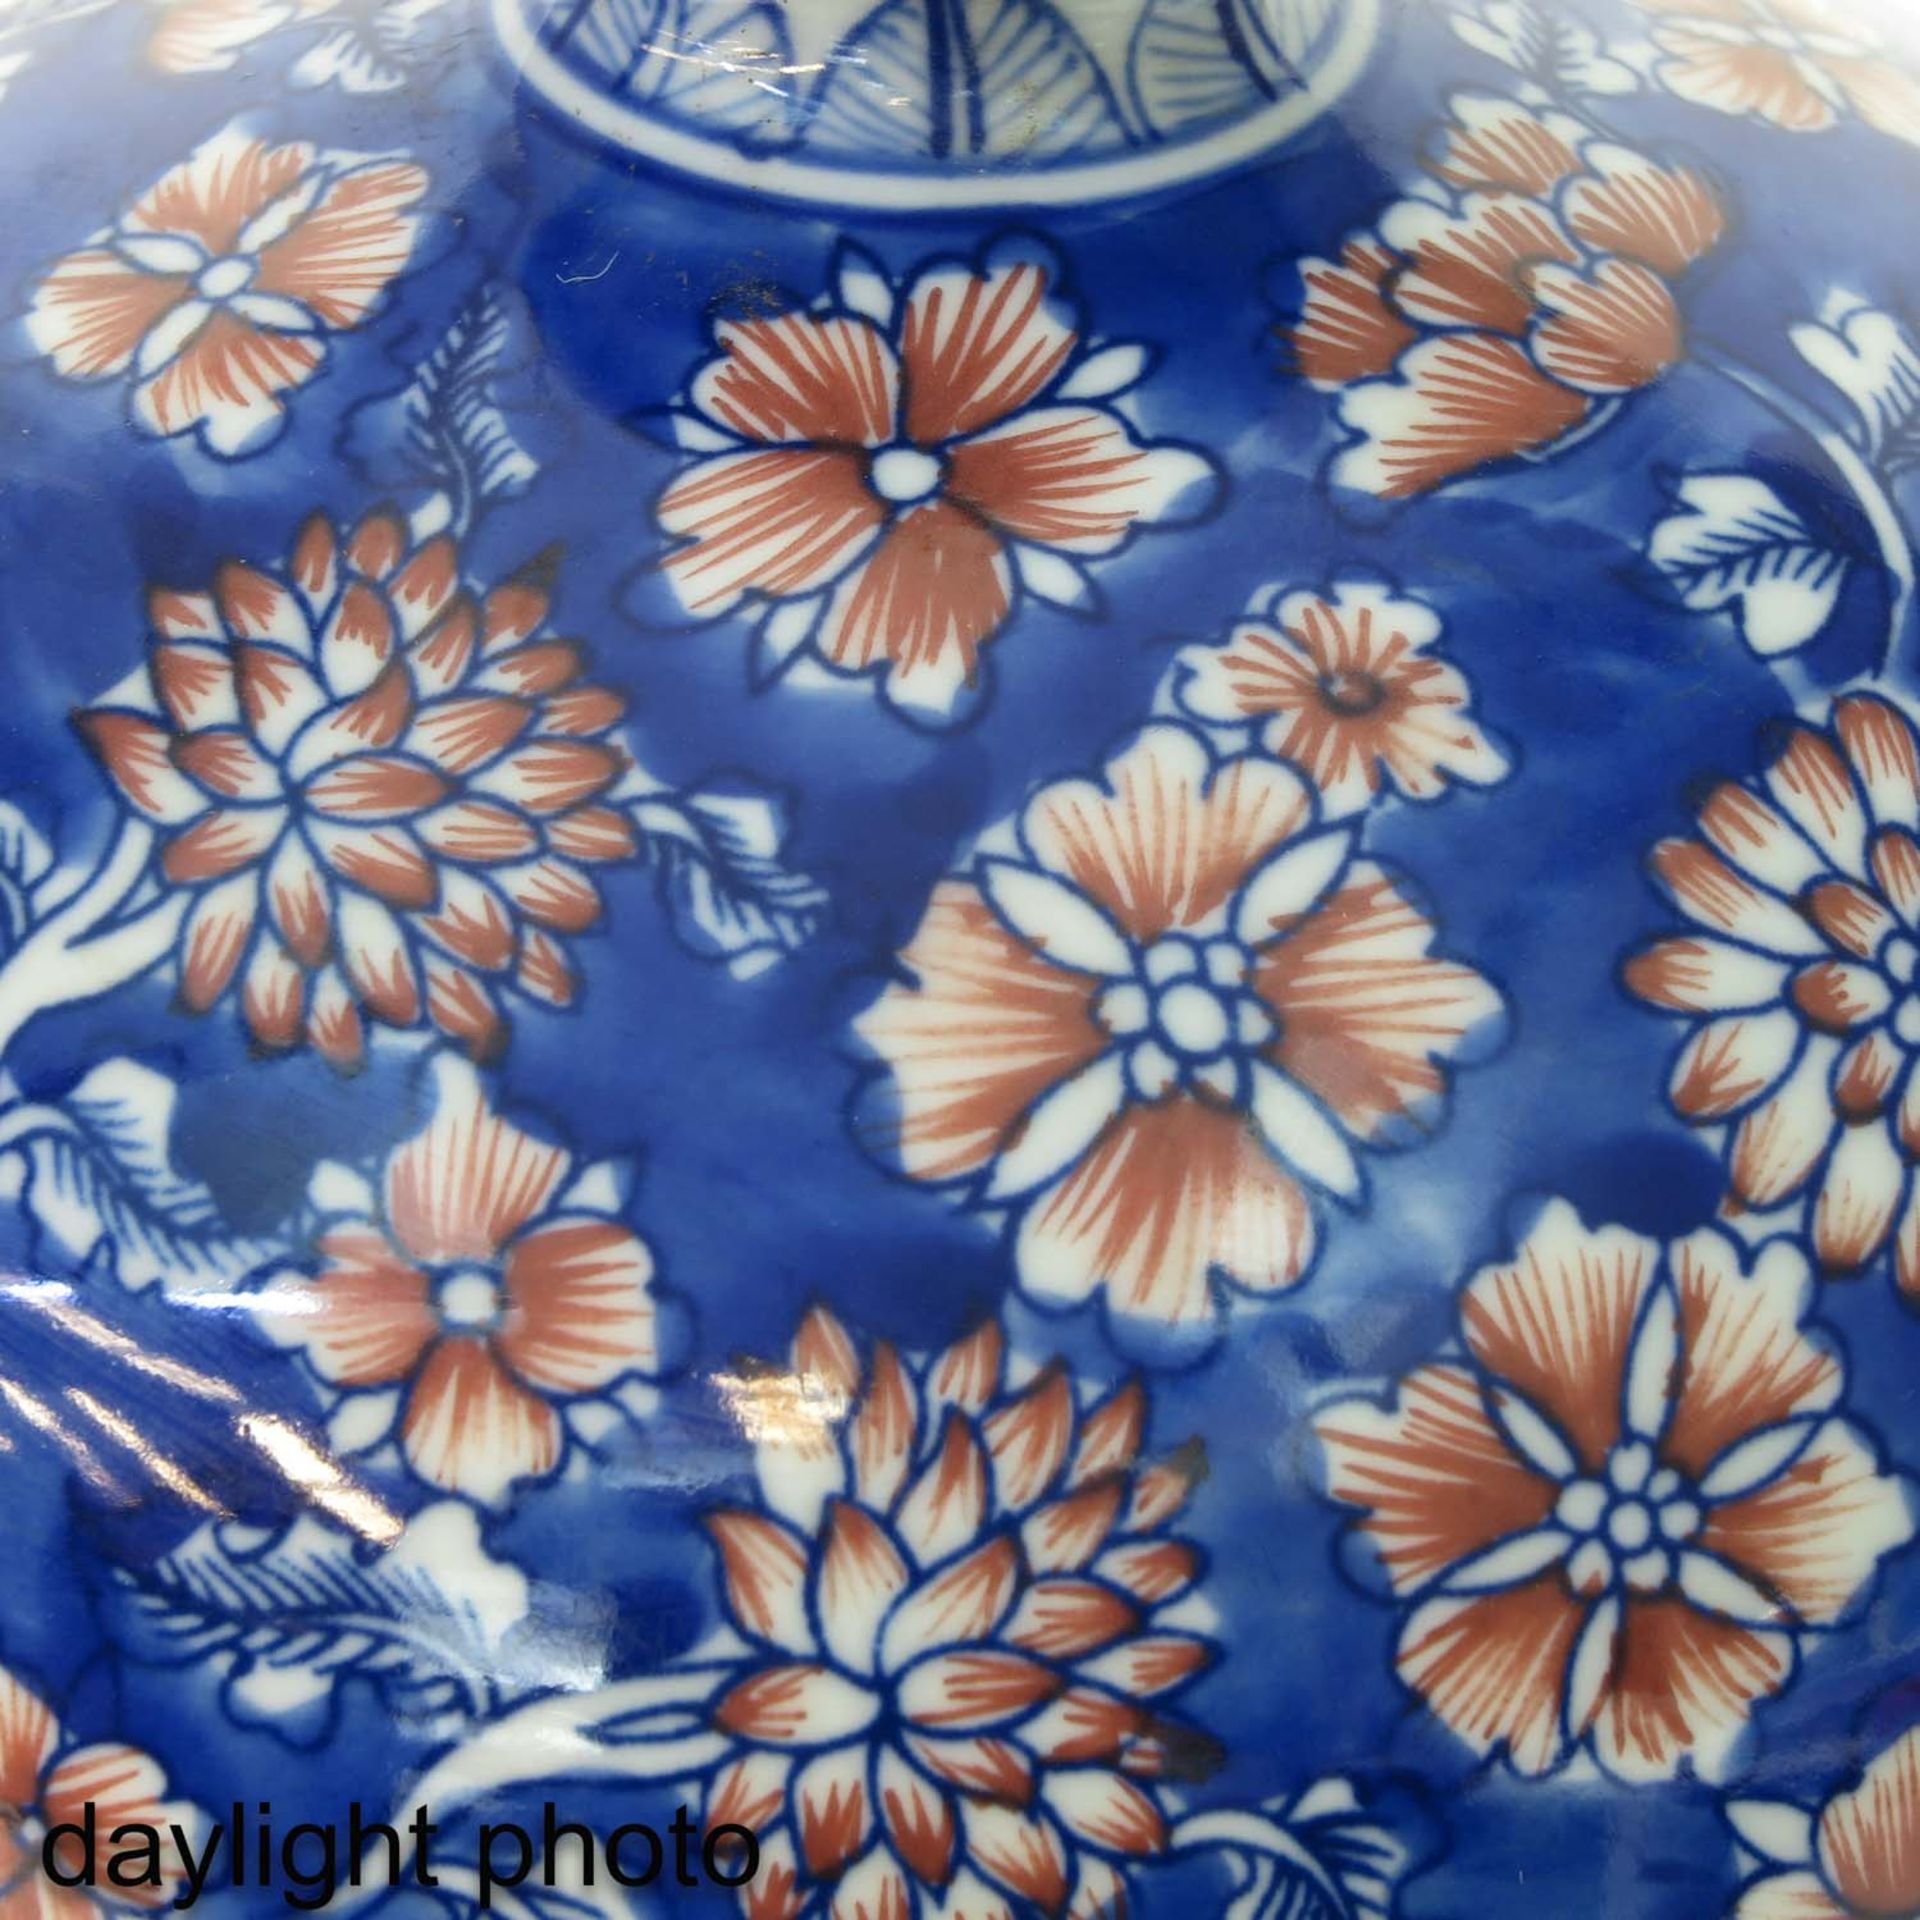 A Floral Decor Vase - Image 10 of 10